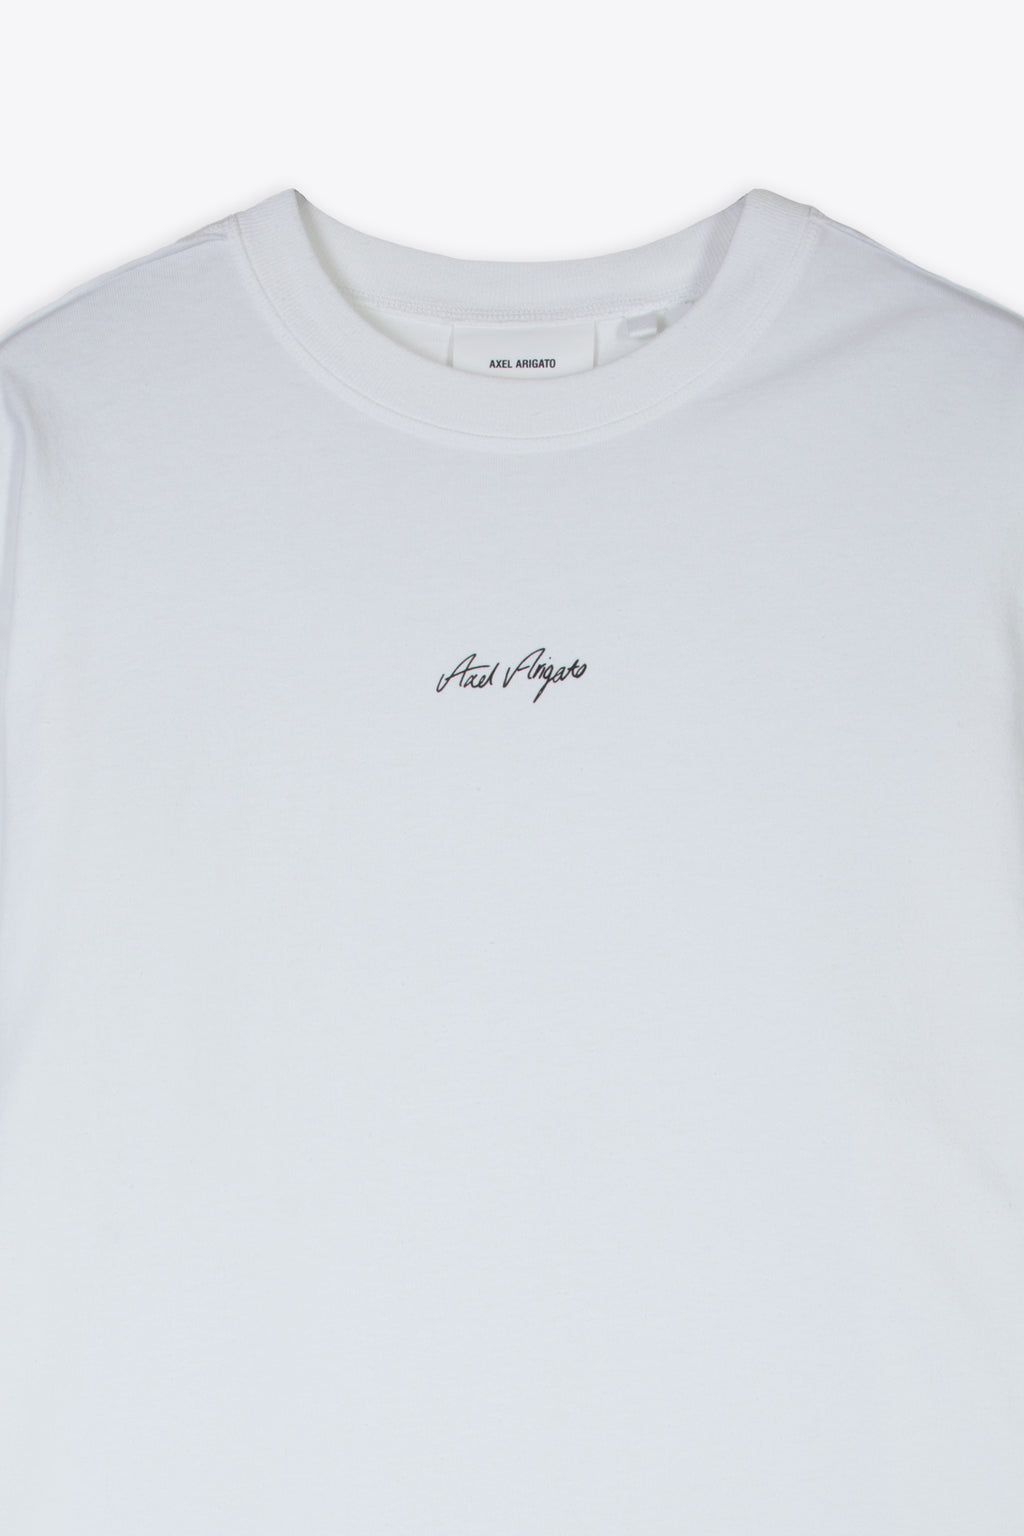 alt-image__White-cotton-t-shirt-with-italic-logo-print---Essential-T-shirt